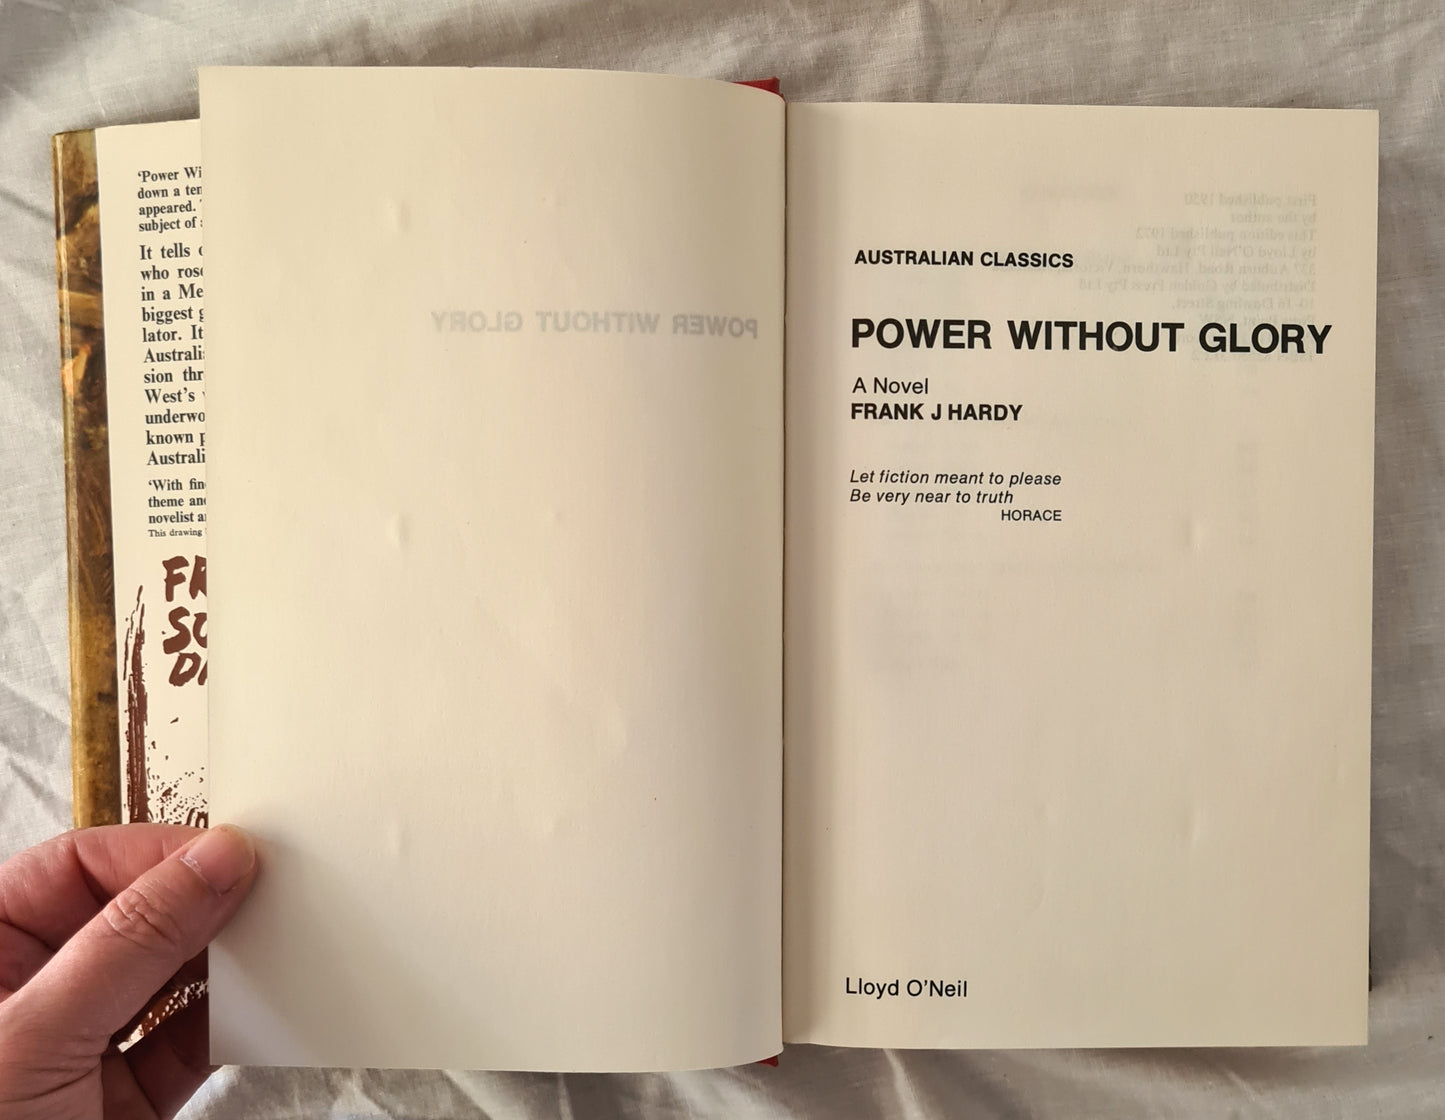 Power Without Glory by Frank J Hardy